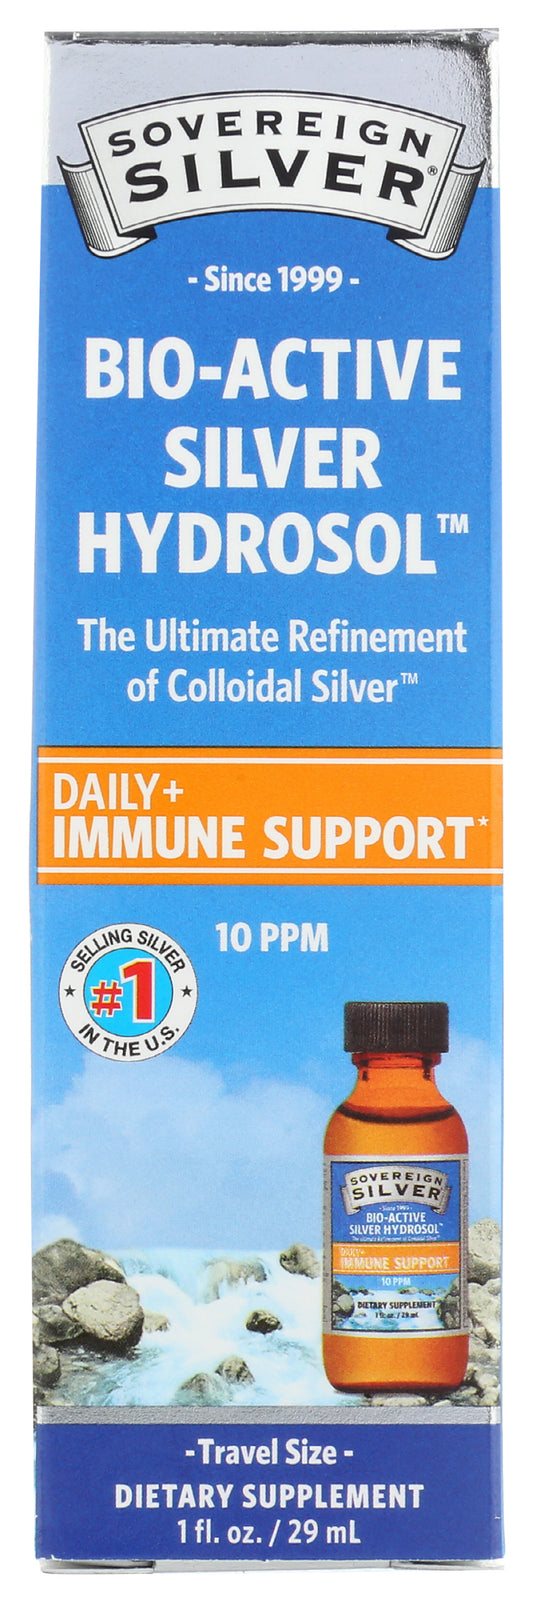 Sovereign Silver Bio-Active Silver Hydrosol Travel Size 1 Fl. Oz. Front of Box